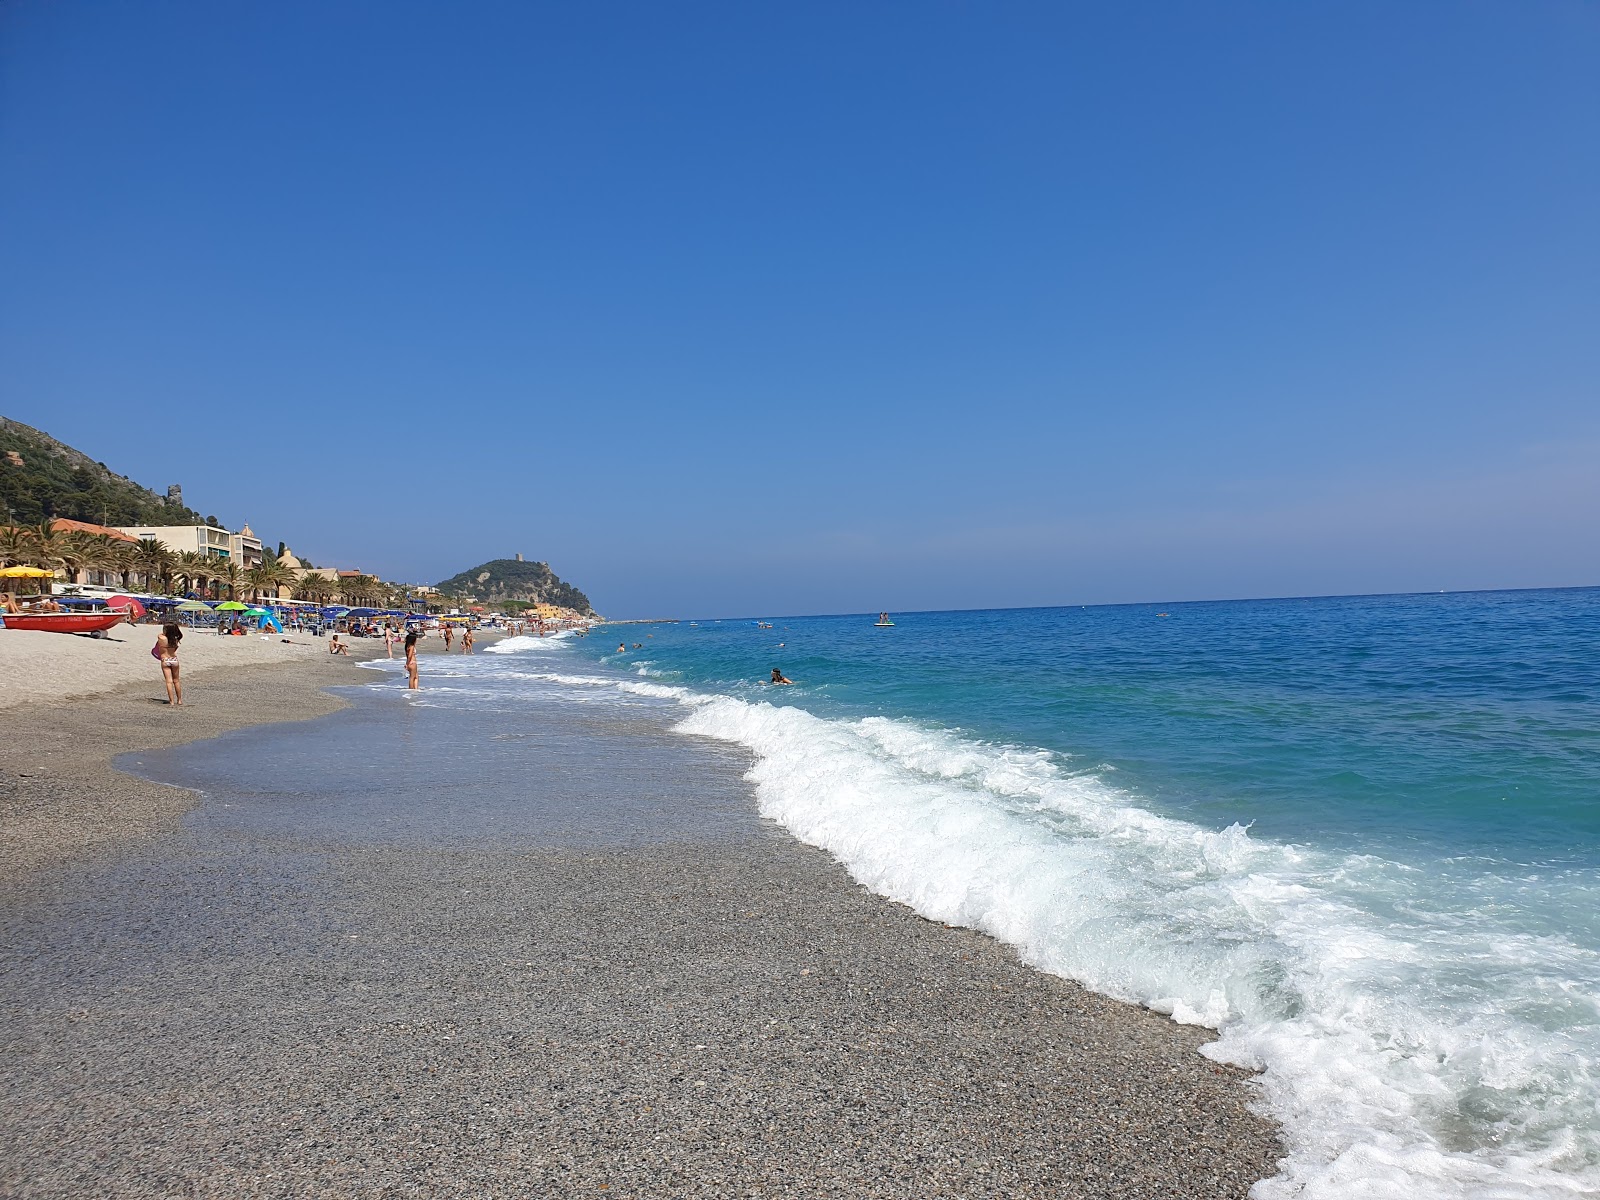 Foto von Spiaggia libera di Varigotti mit langer gerader strand